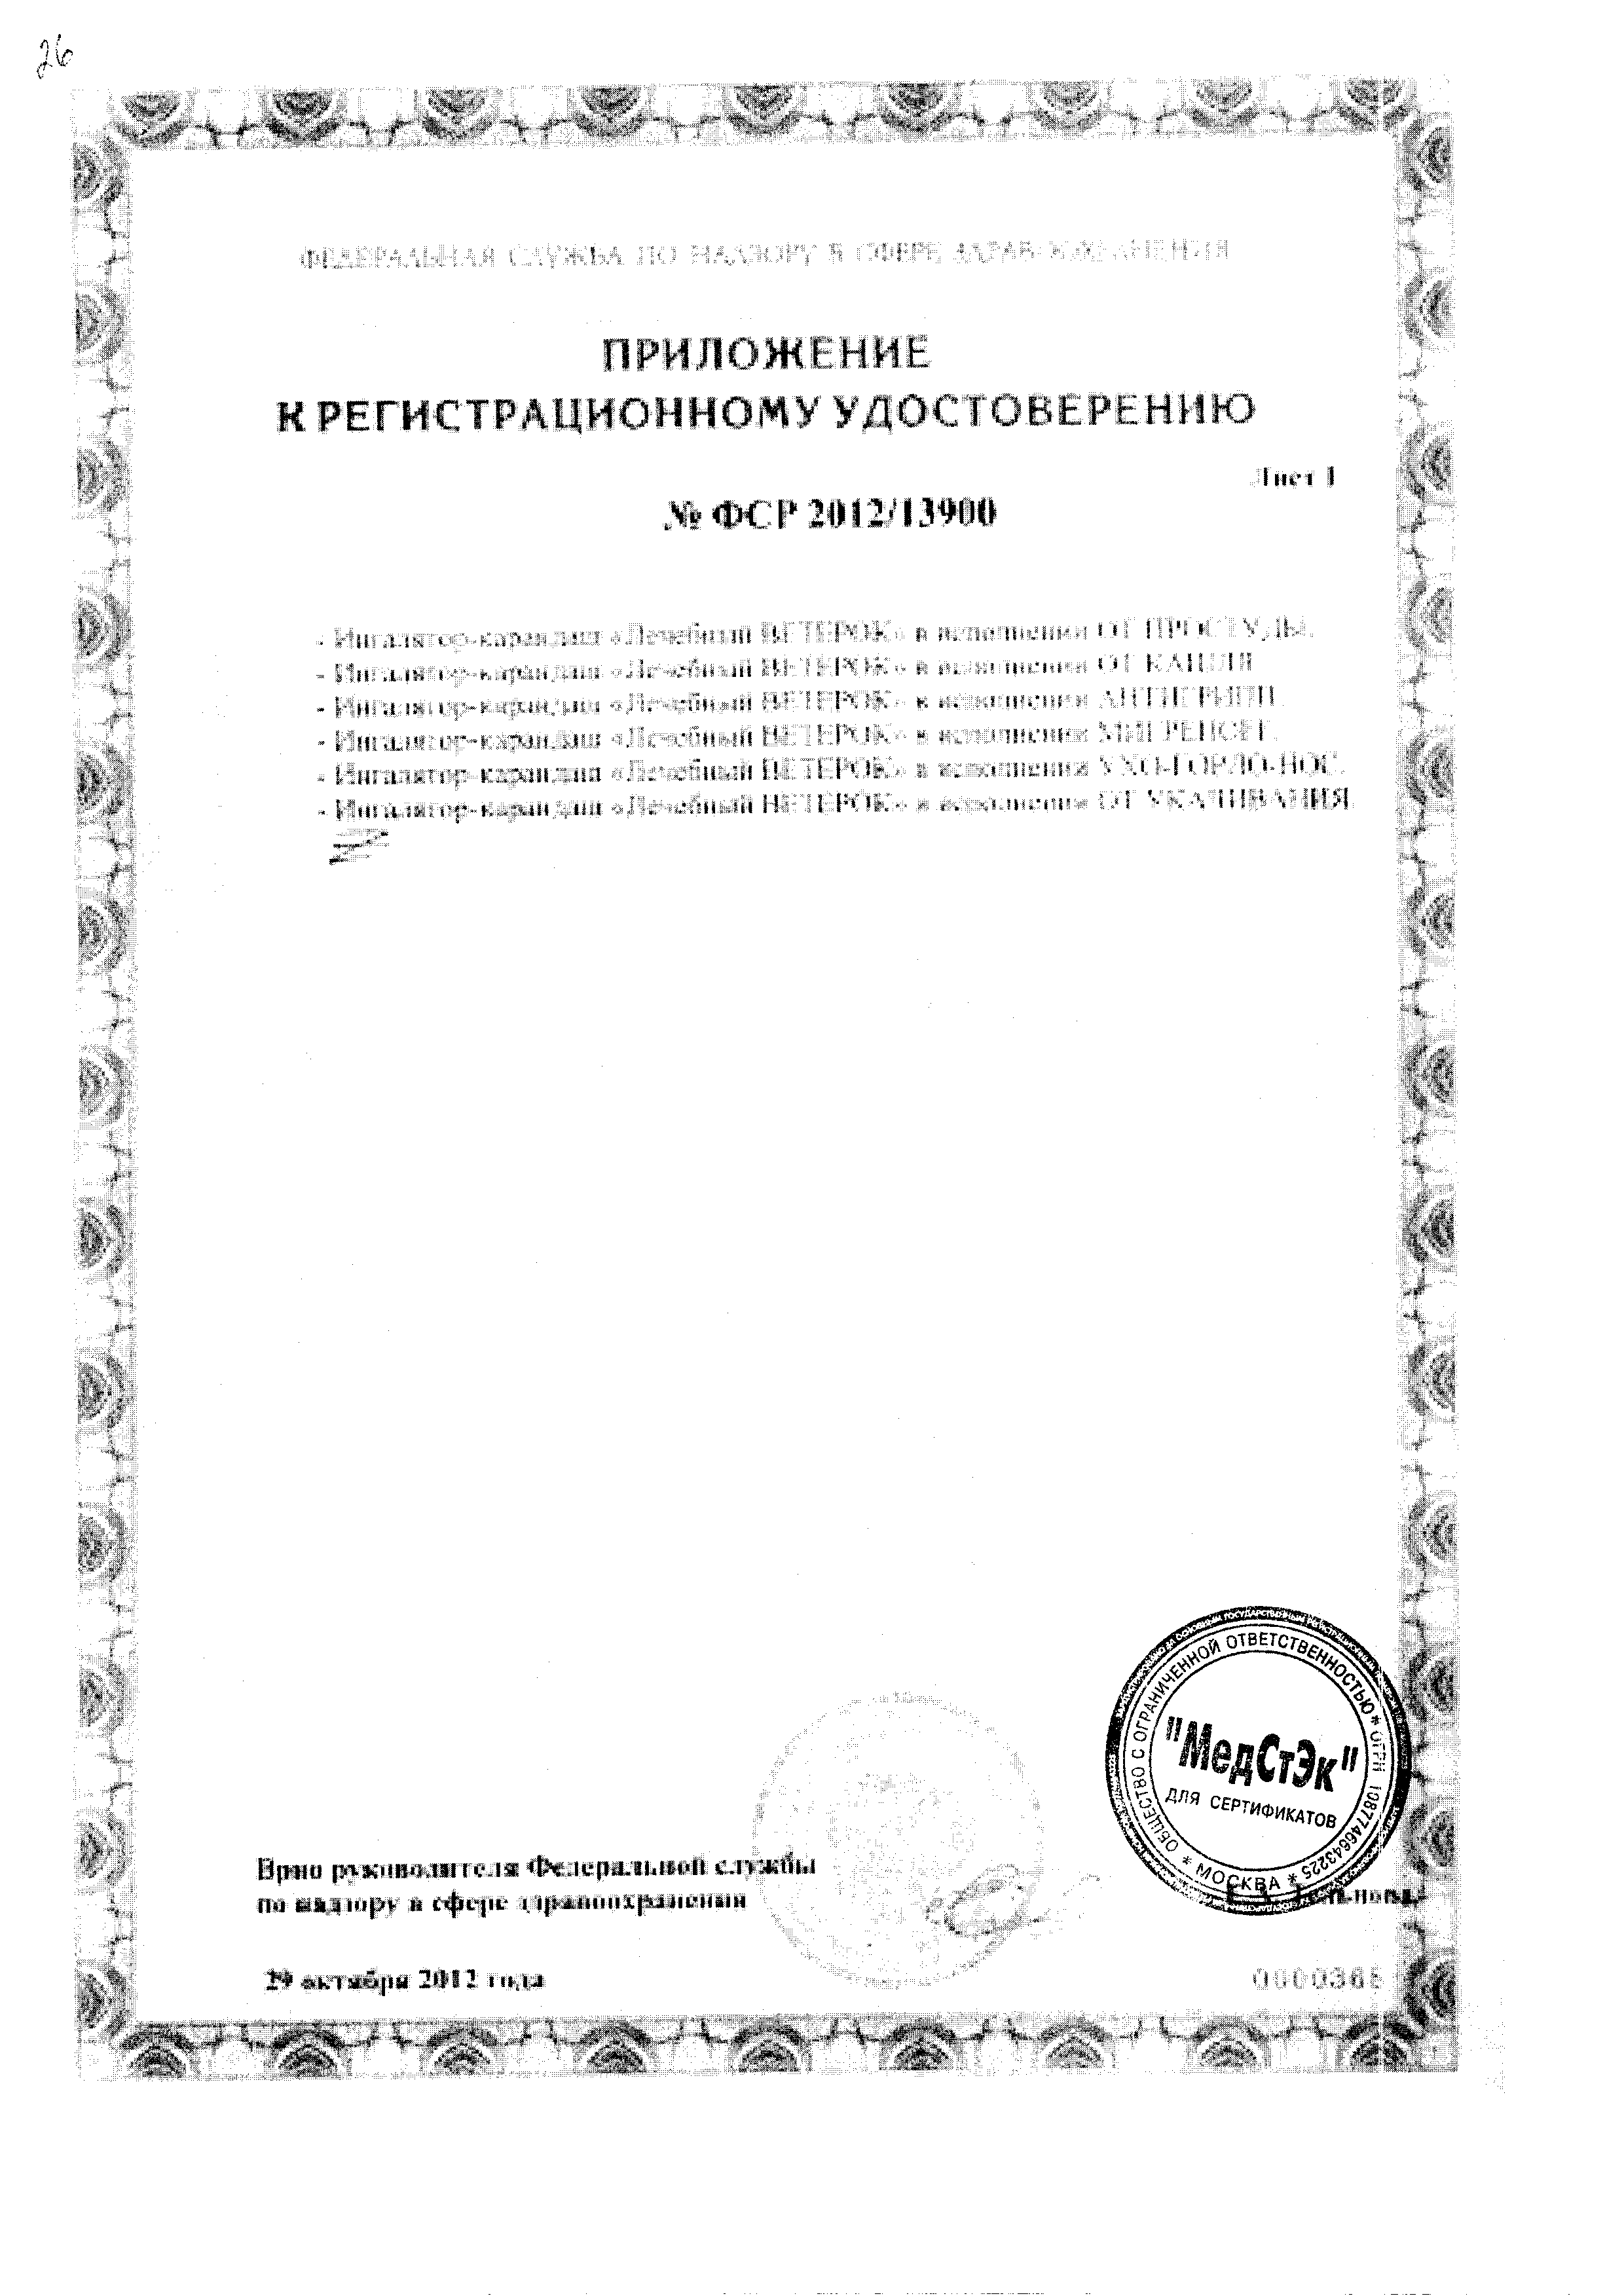 Ингалятор-карандаш Лечебный ветерок Мигренофф сертификат